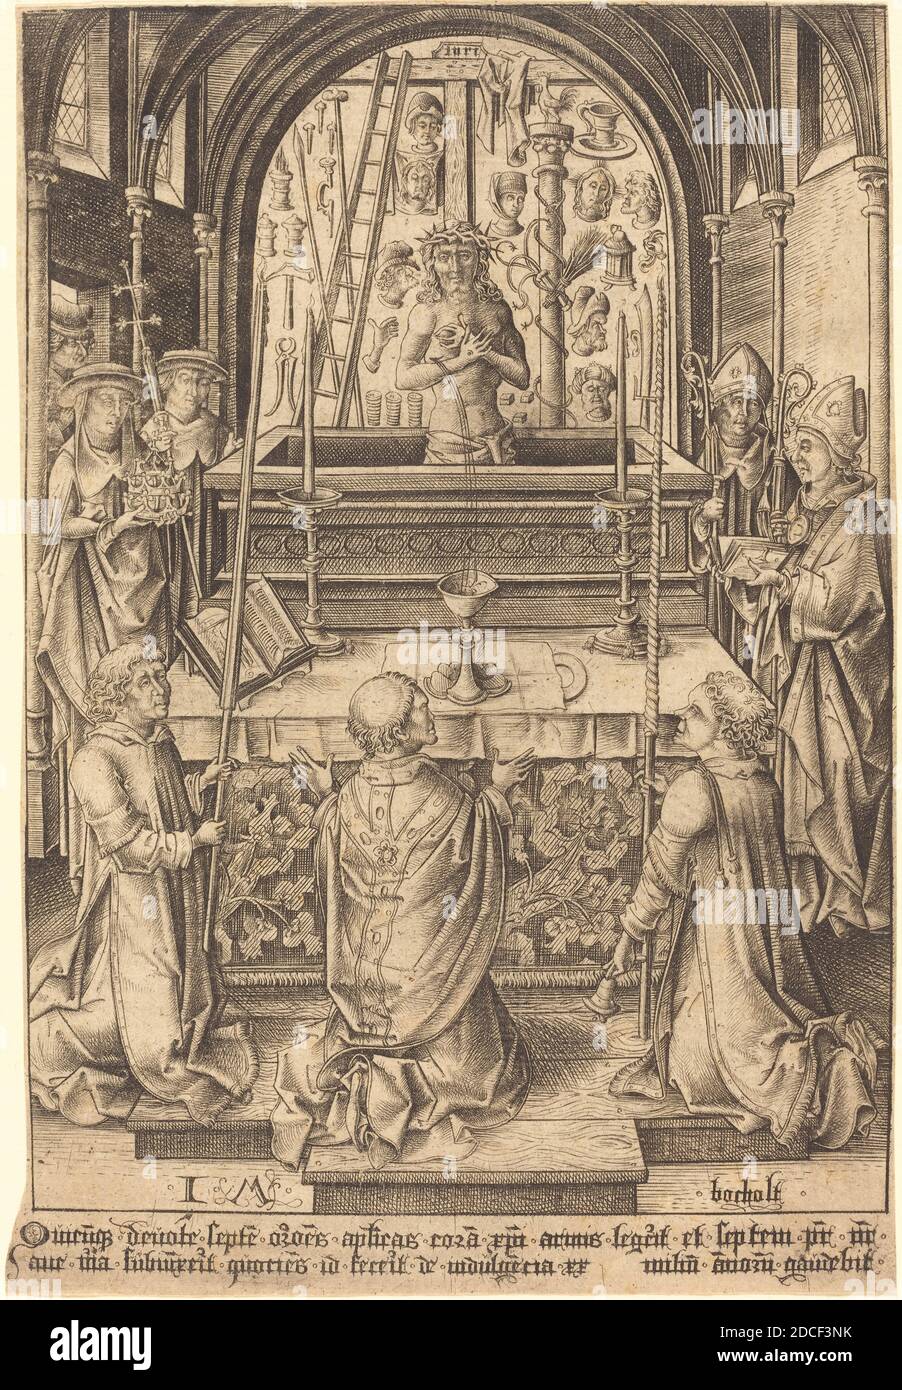 Israhel van Meckenem, (artist), German, c. 1445 - 1503, The Mass of Saint Gregory, c. 1480/1485, engraving Stock Photo